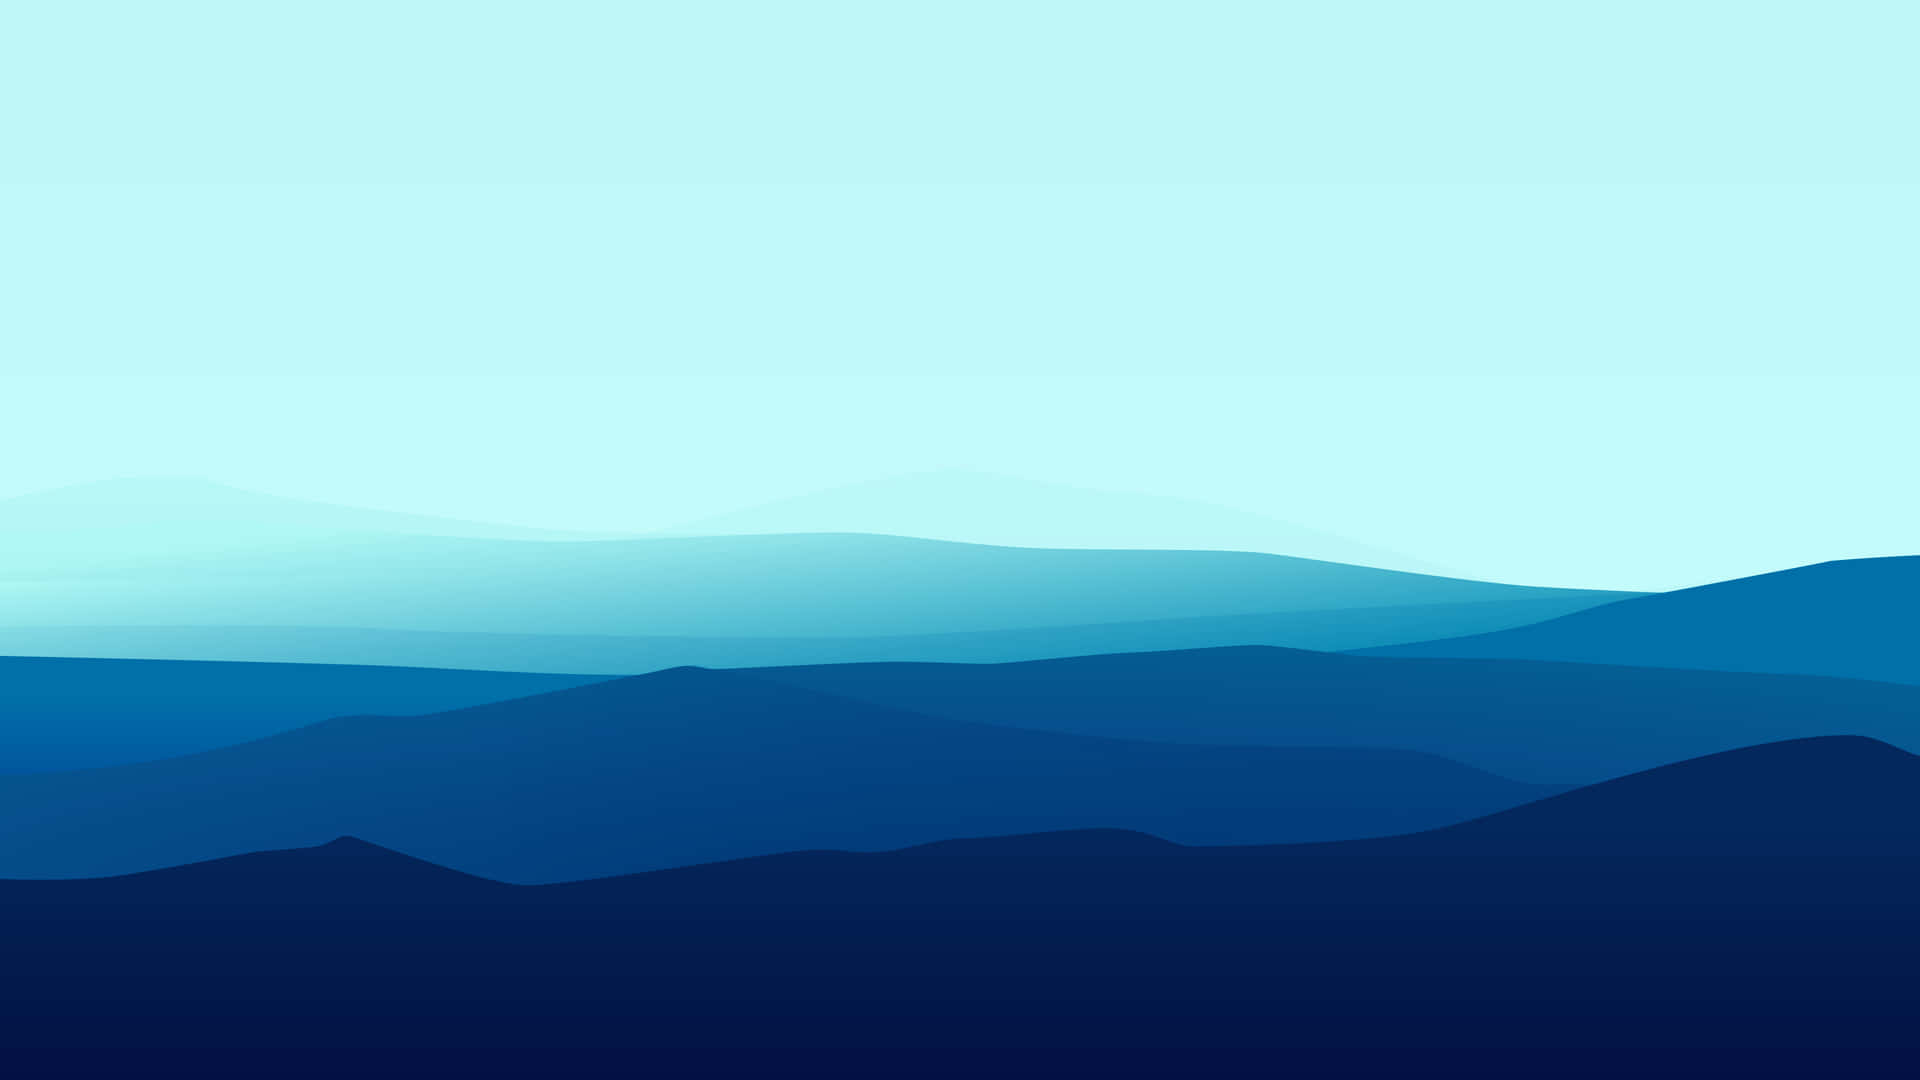 Download 4k Minimal Blue Mountain Range Landscape Wallpaper ...